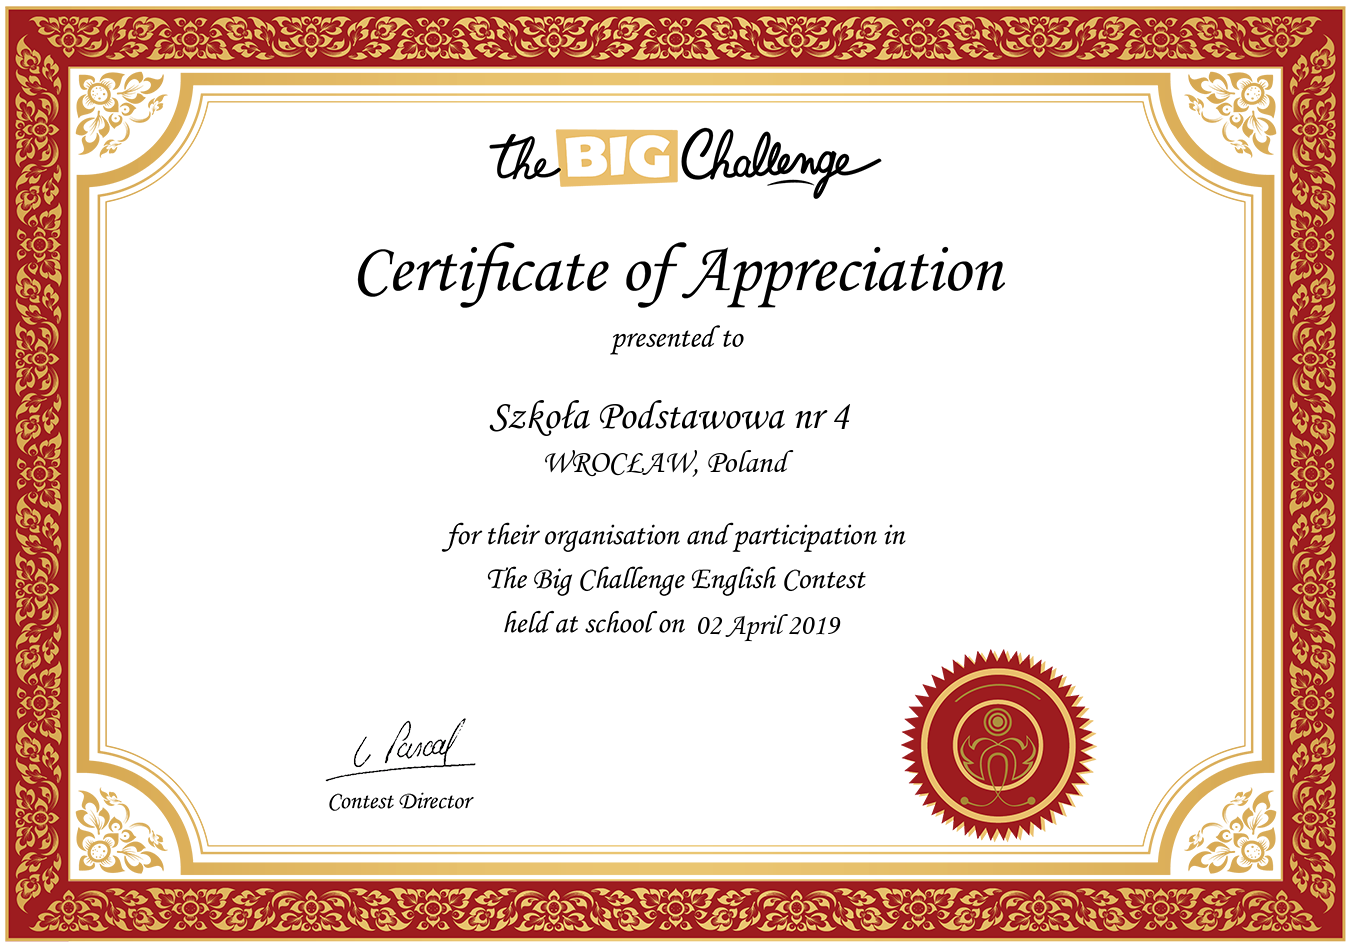 Peer certificate. Certificate of Appreciation. Certificate 2020. Certificate for Appreciation. Certificate шаблон.